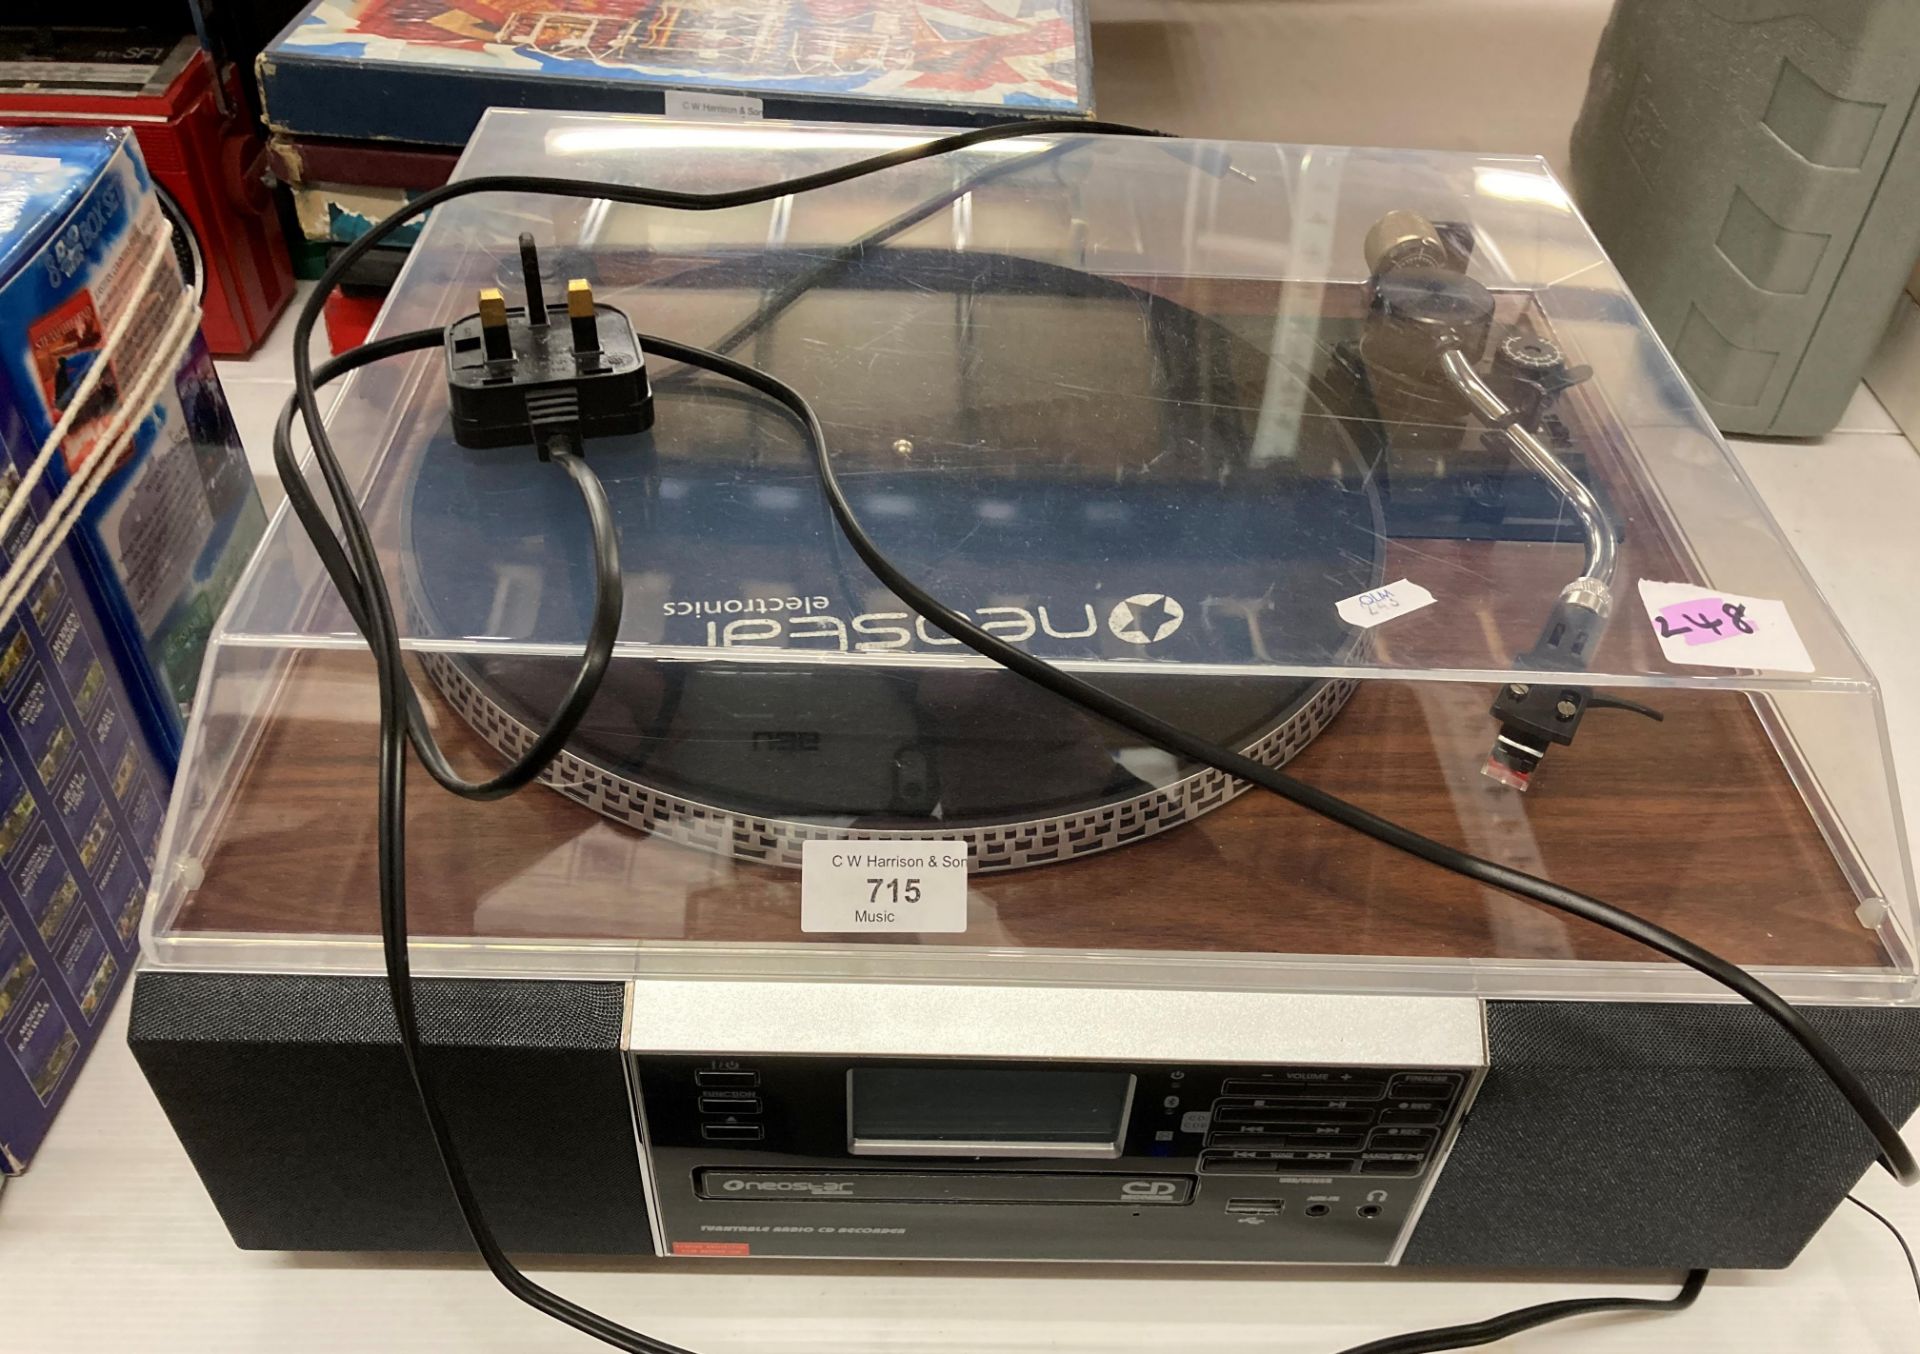 A Neostar table top turntable/radio/CD recorded (Saleroom location: R05)